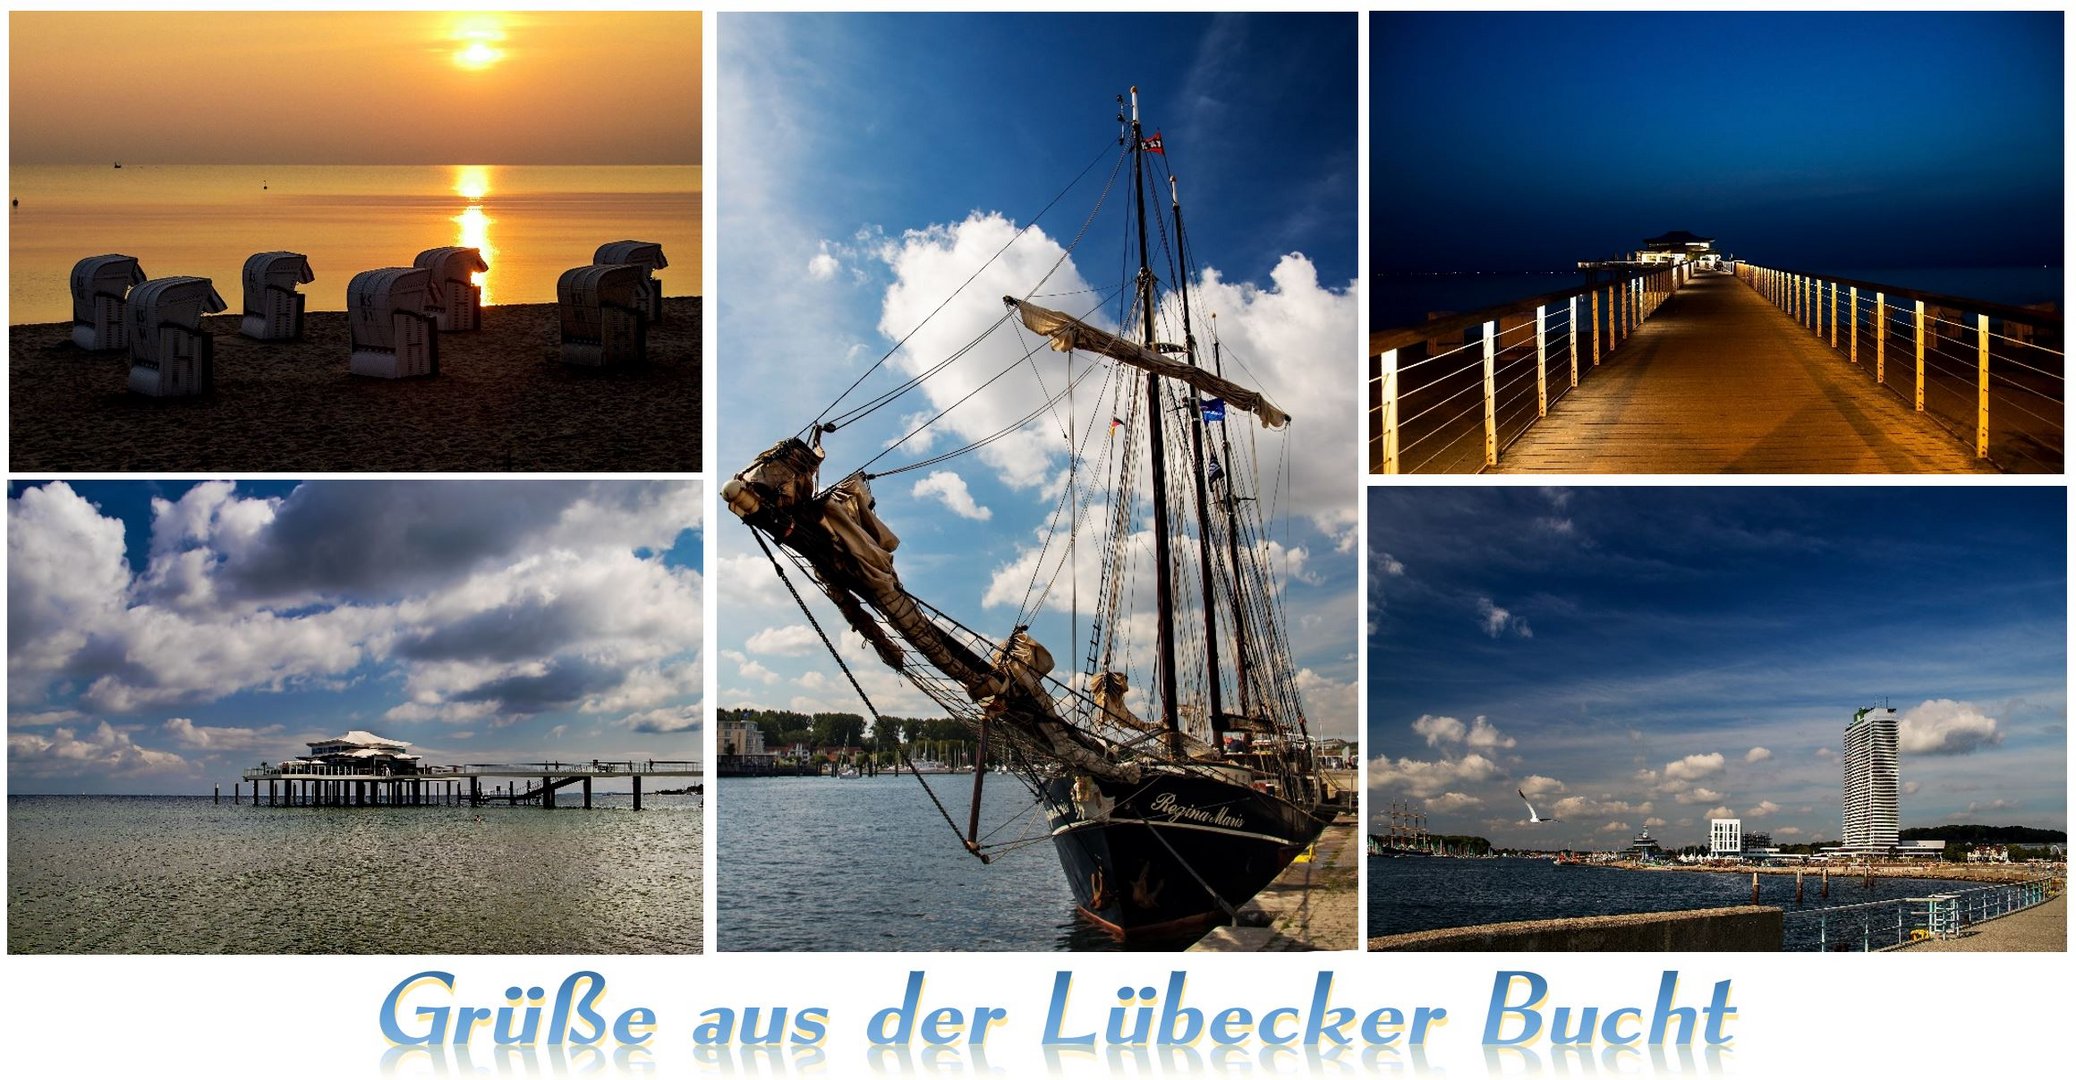 "Grüße aus der Lübecker Bucht"  / "Greetings from Lübeck Bay"